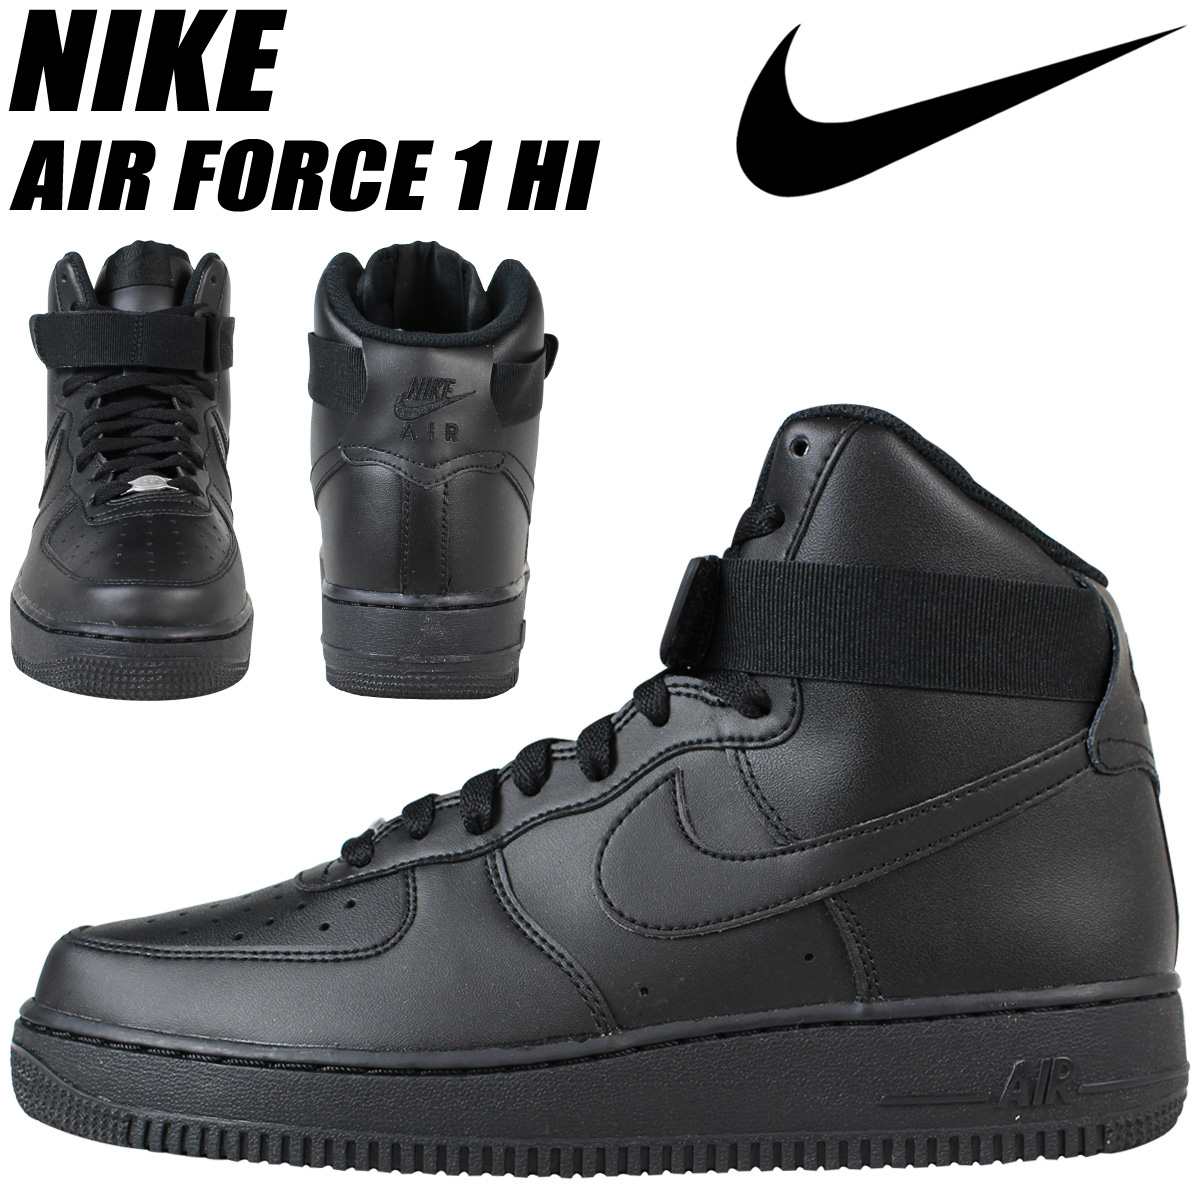 nike air force 1 steel toe